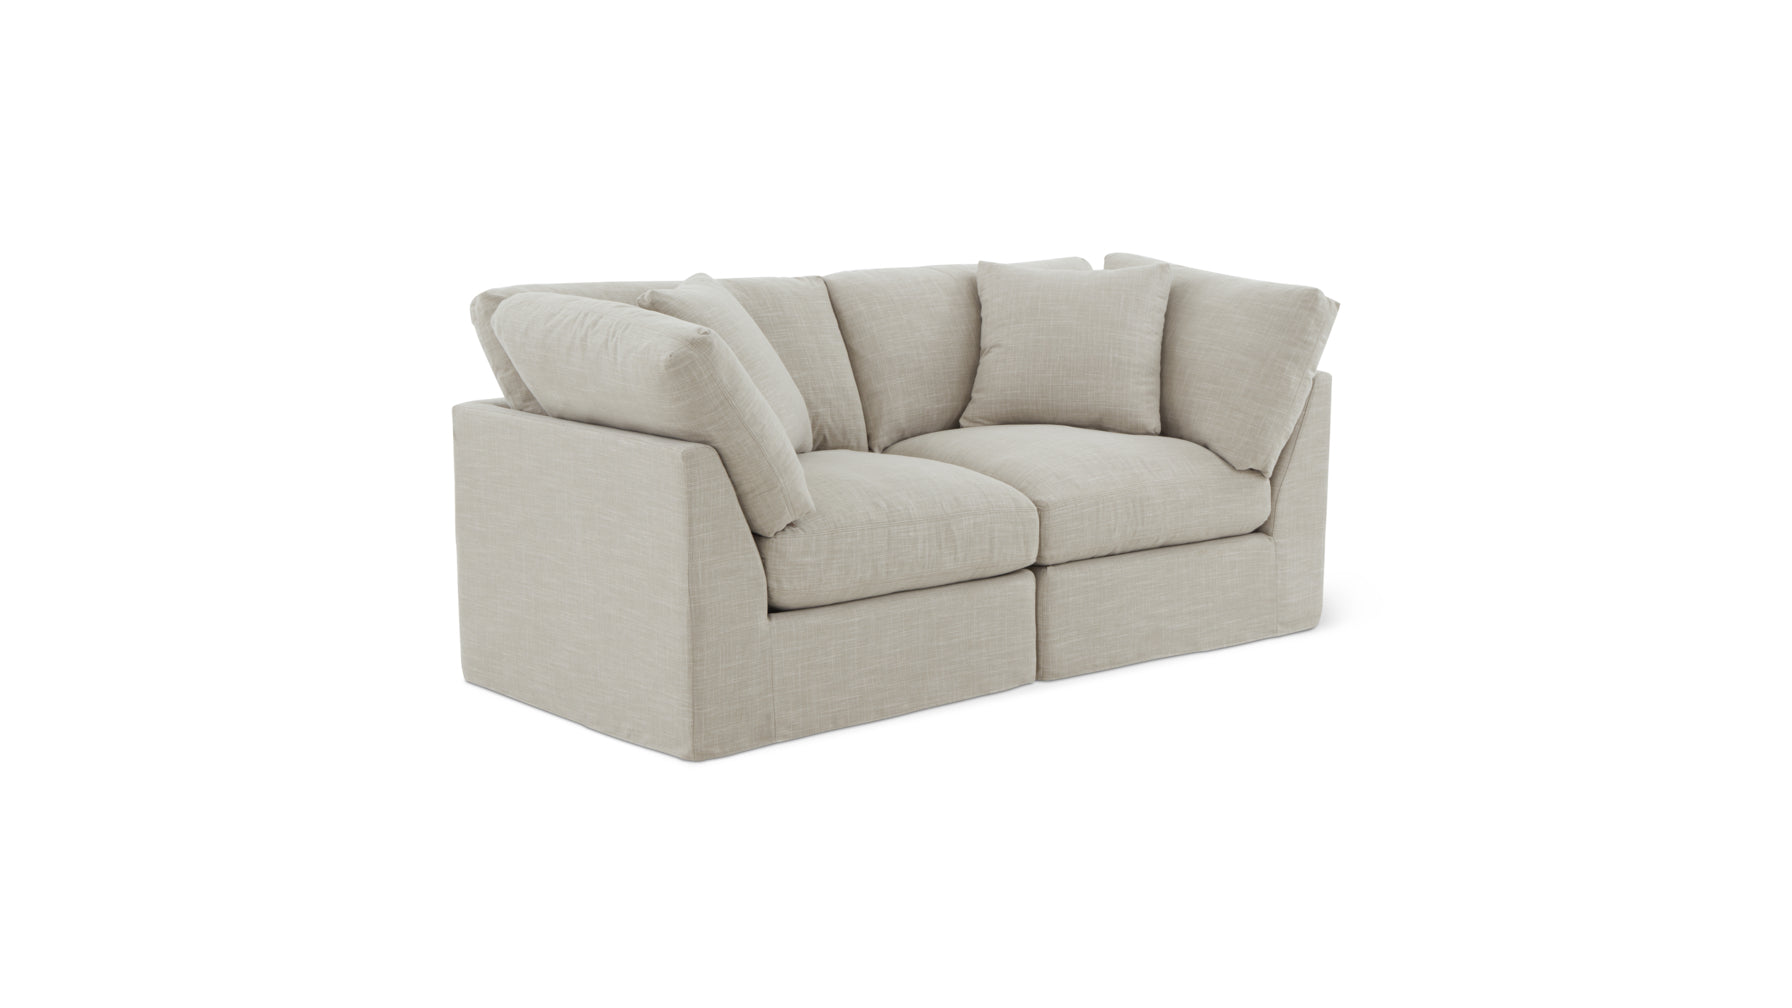 Get Together™ 2-Piece Modular Sofa, Standard, Light Pebble - Image 2